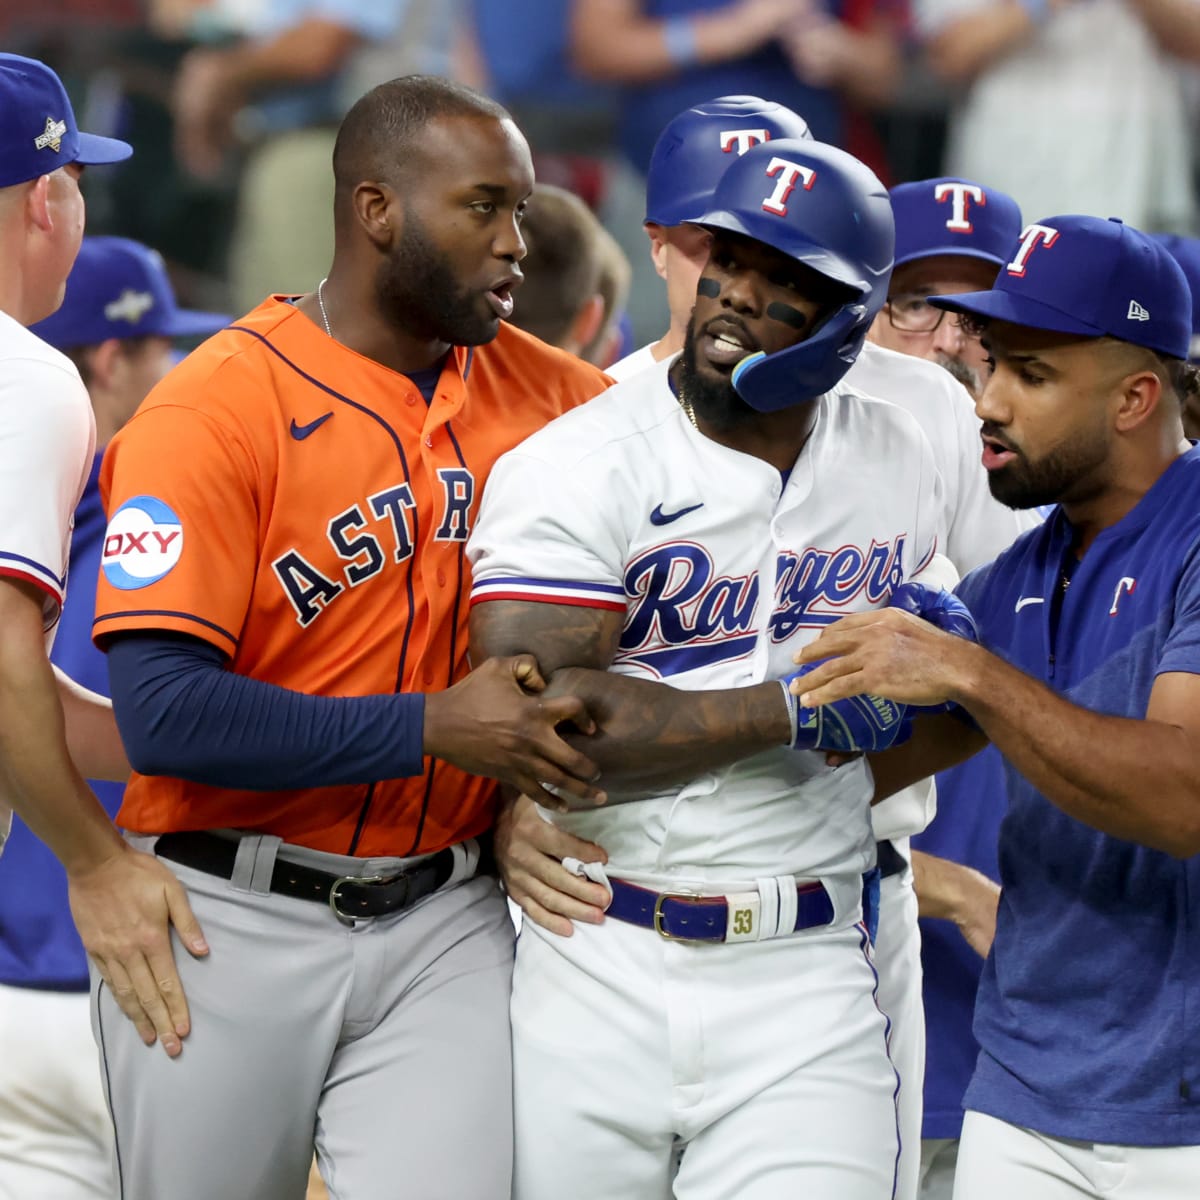 Texas Rangers' Bruce Bochy Calls Benches-Clearing Delay 'Crap